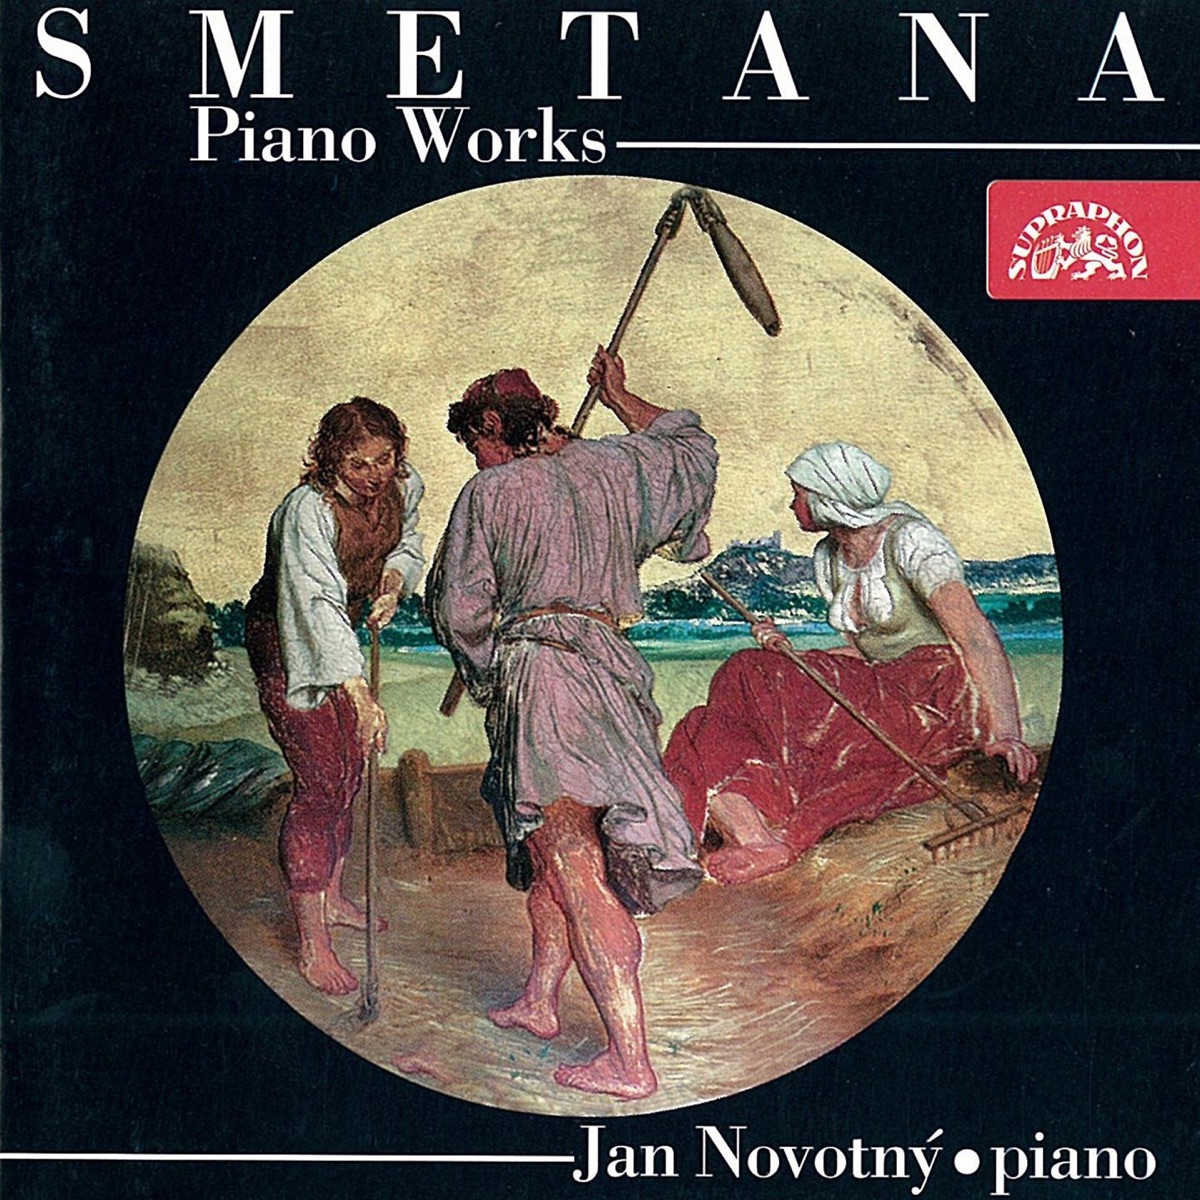 Smetana: Piano Works - Album by Jan Novotný - Apple Music